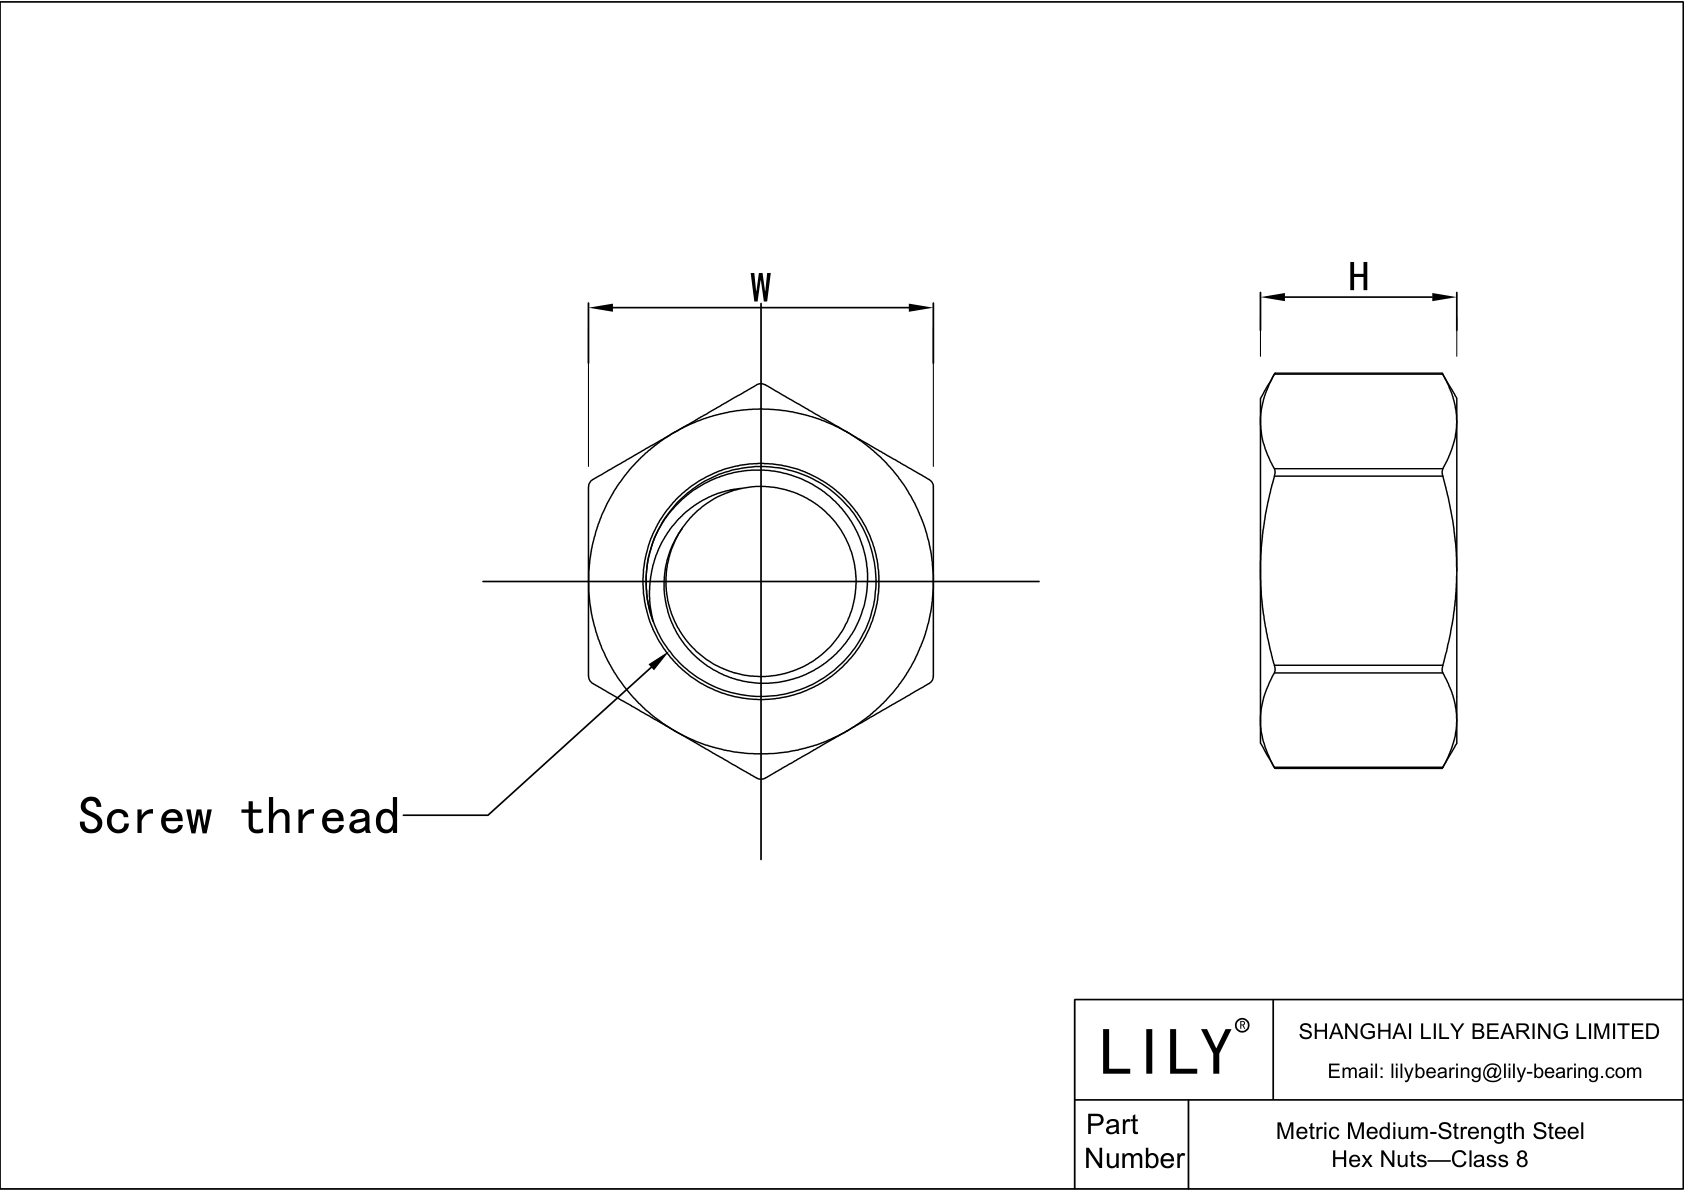 90592A016 | Metric Medium-Strength Steel Hex Nuts—Class 8 | Lily 